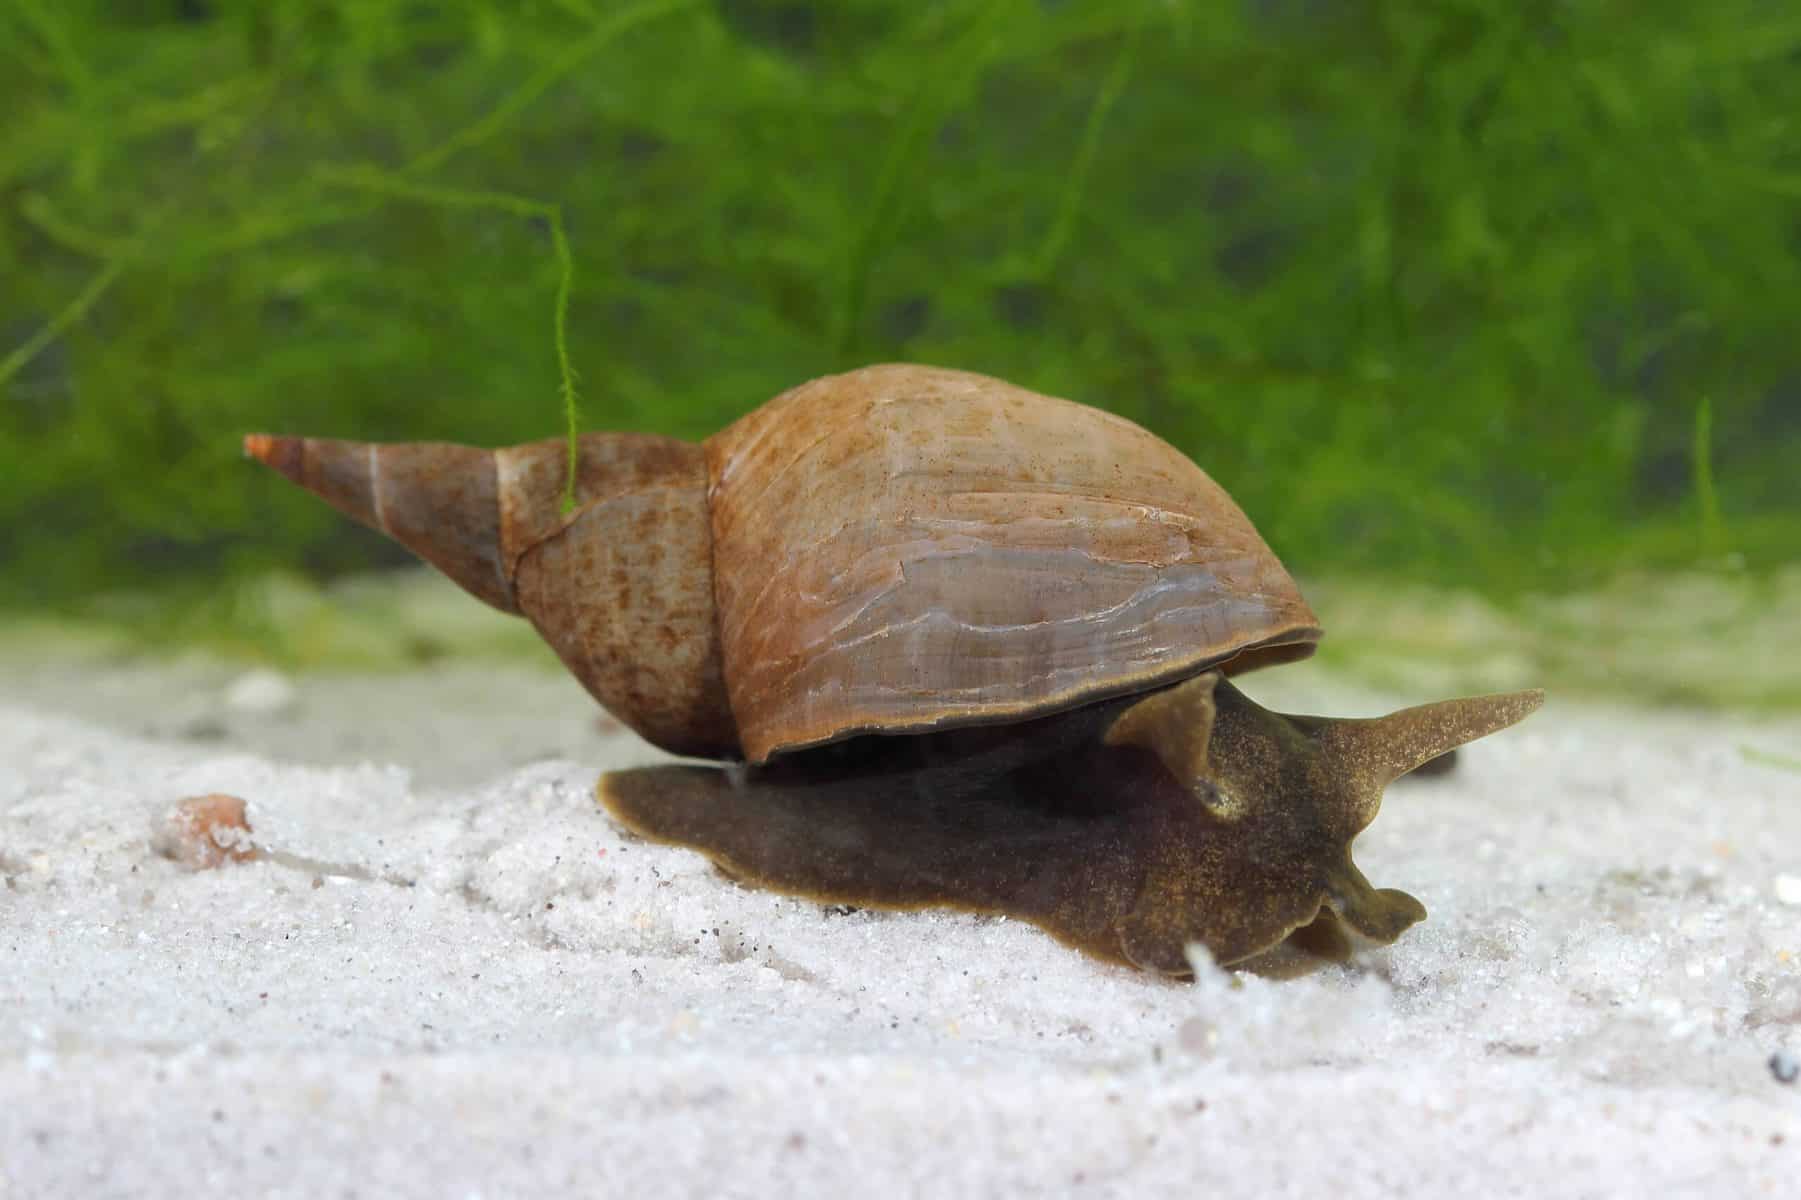 Pond Snail